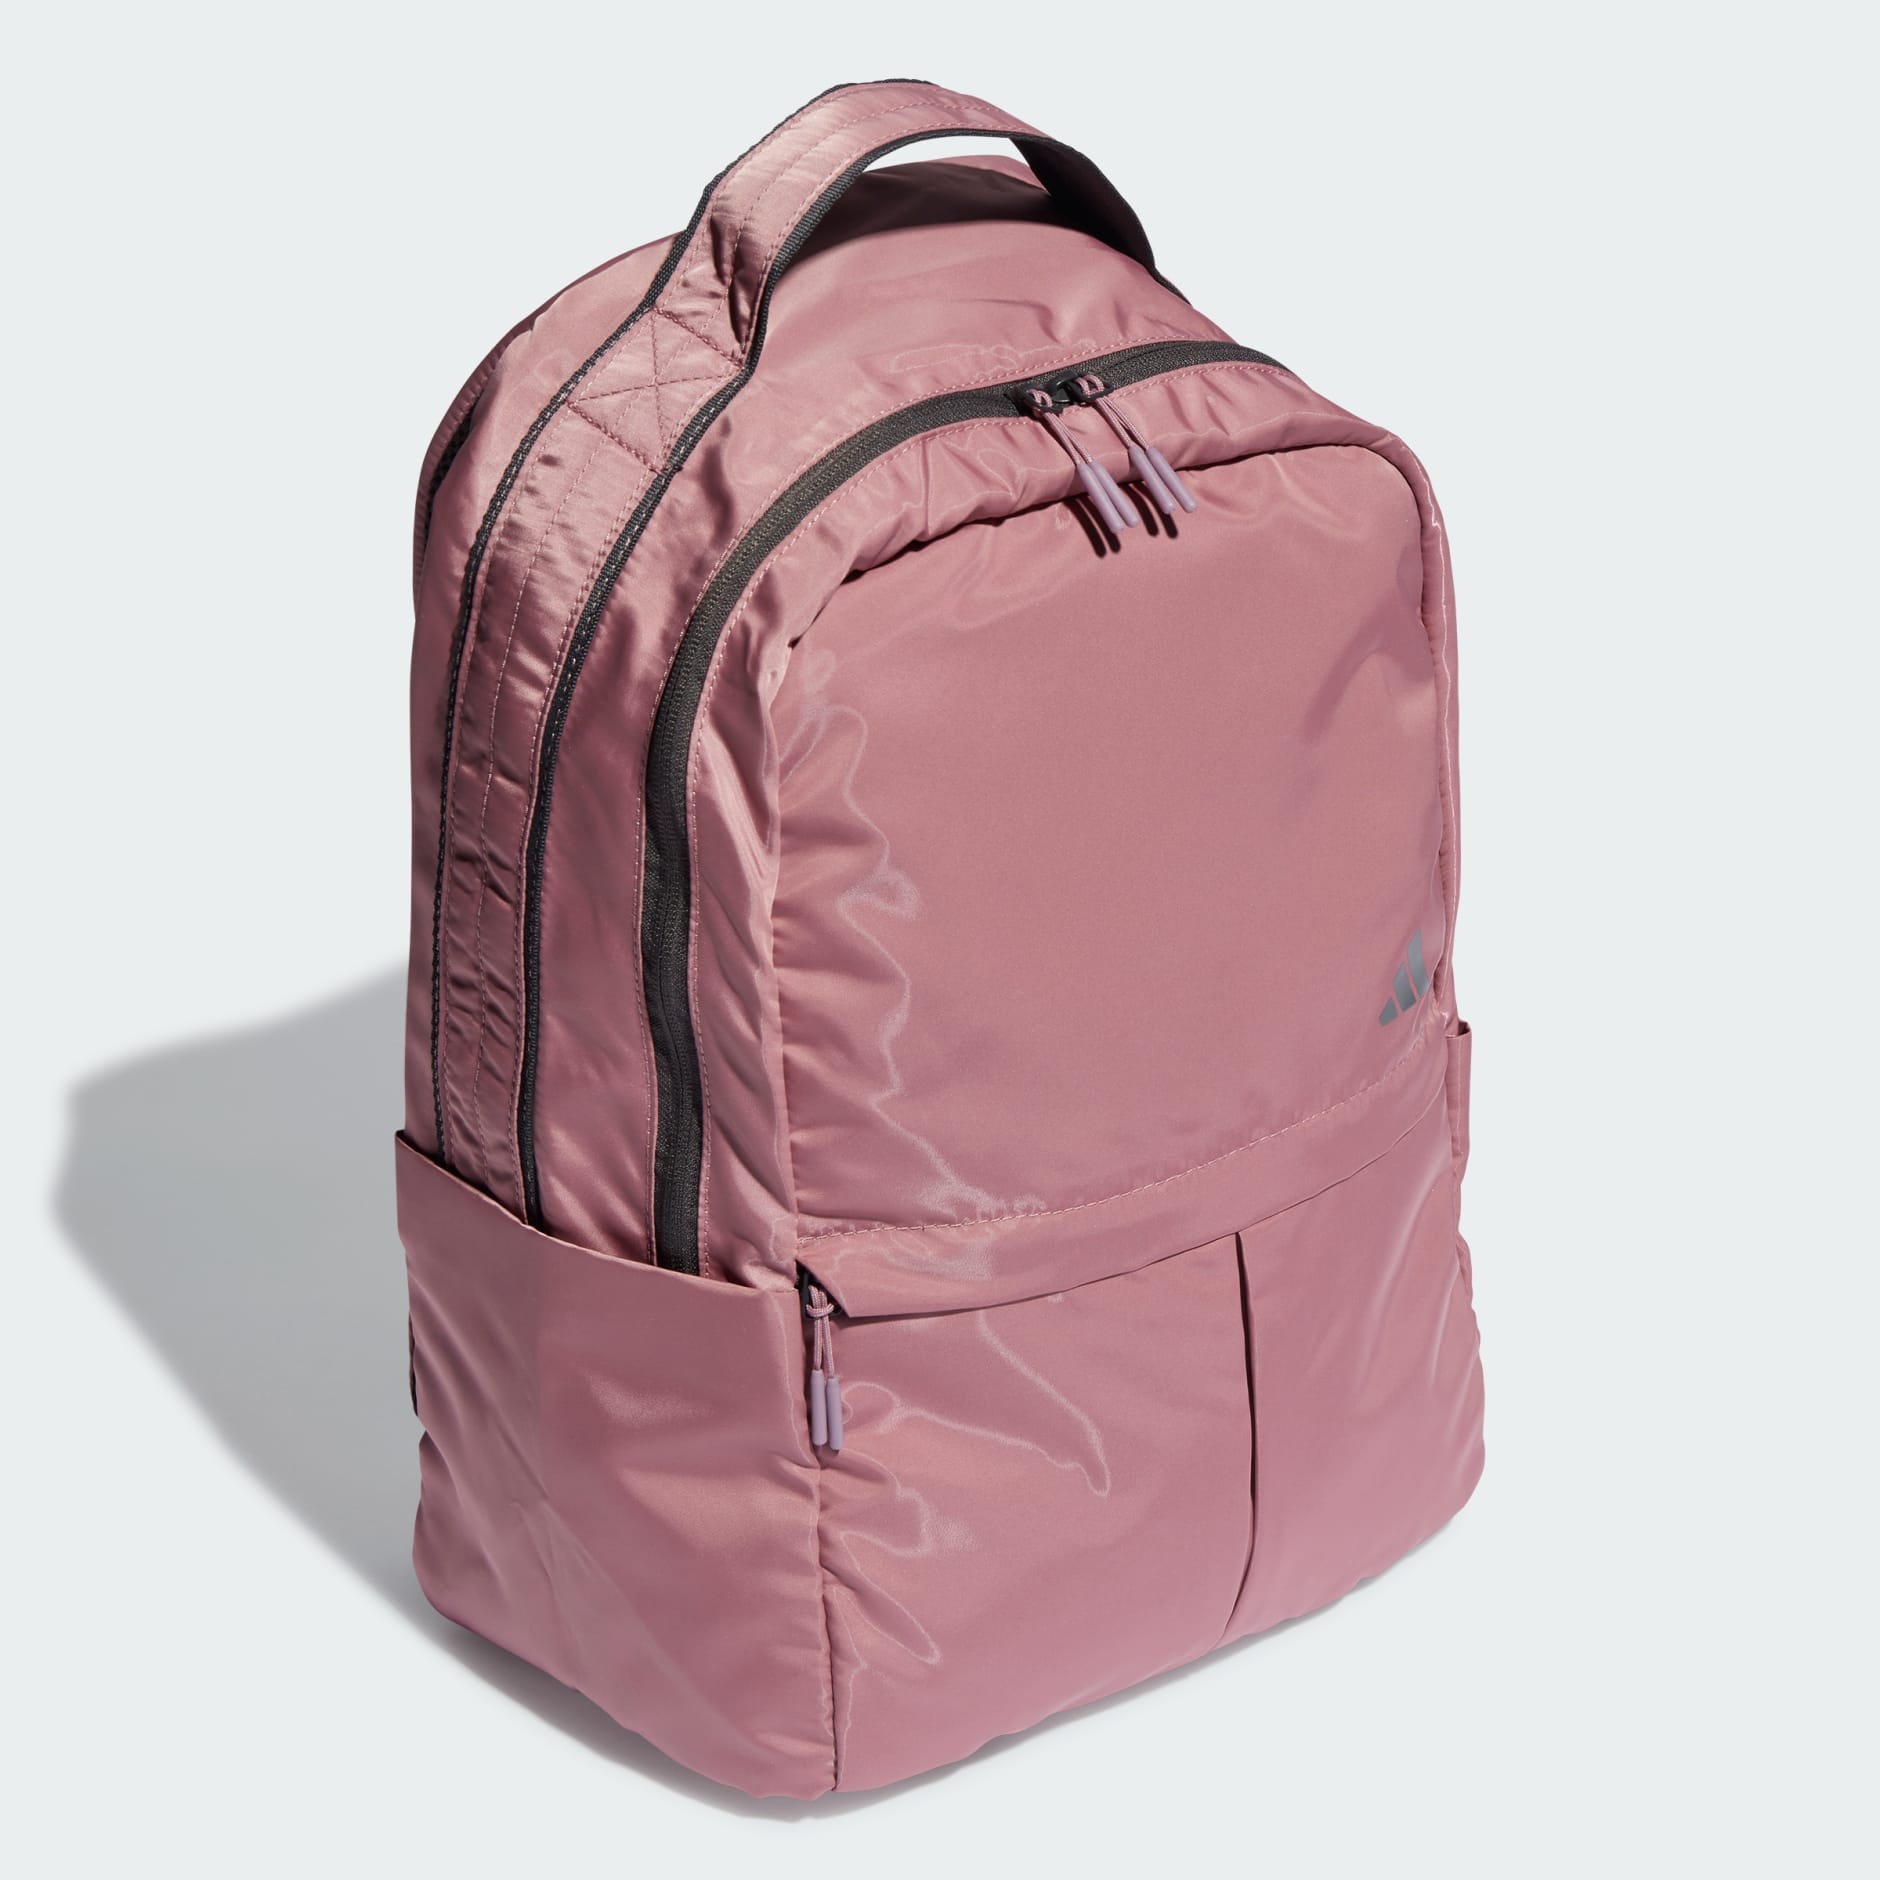 Adidas Yoga Backpack, Women's Fashion, Bags & Wallets, Backpacks